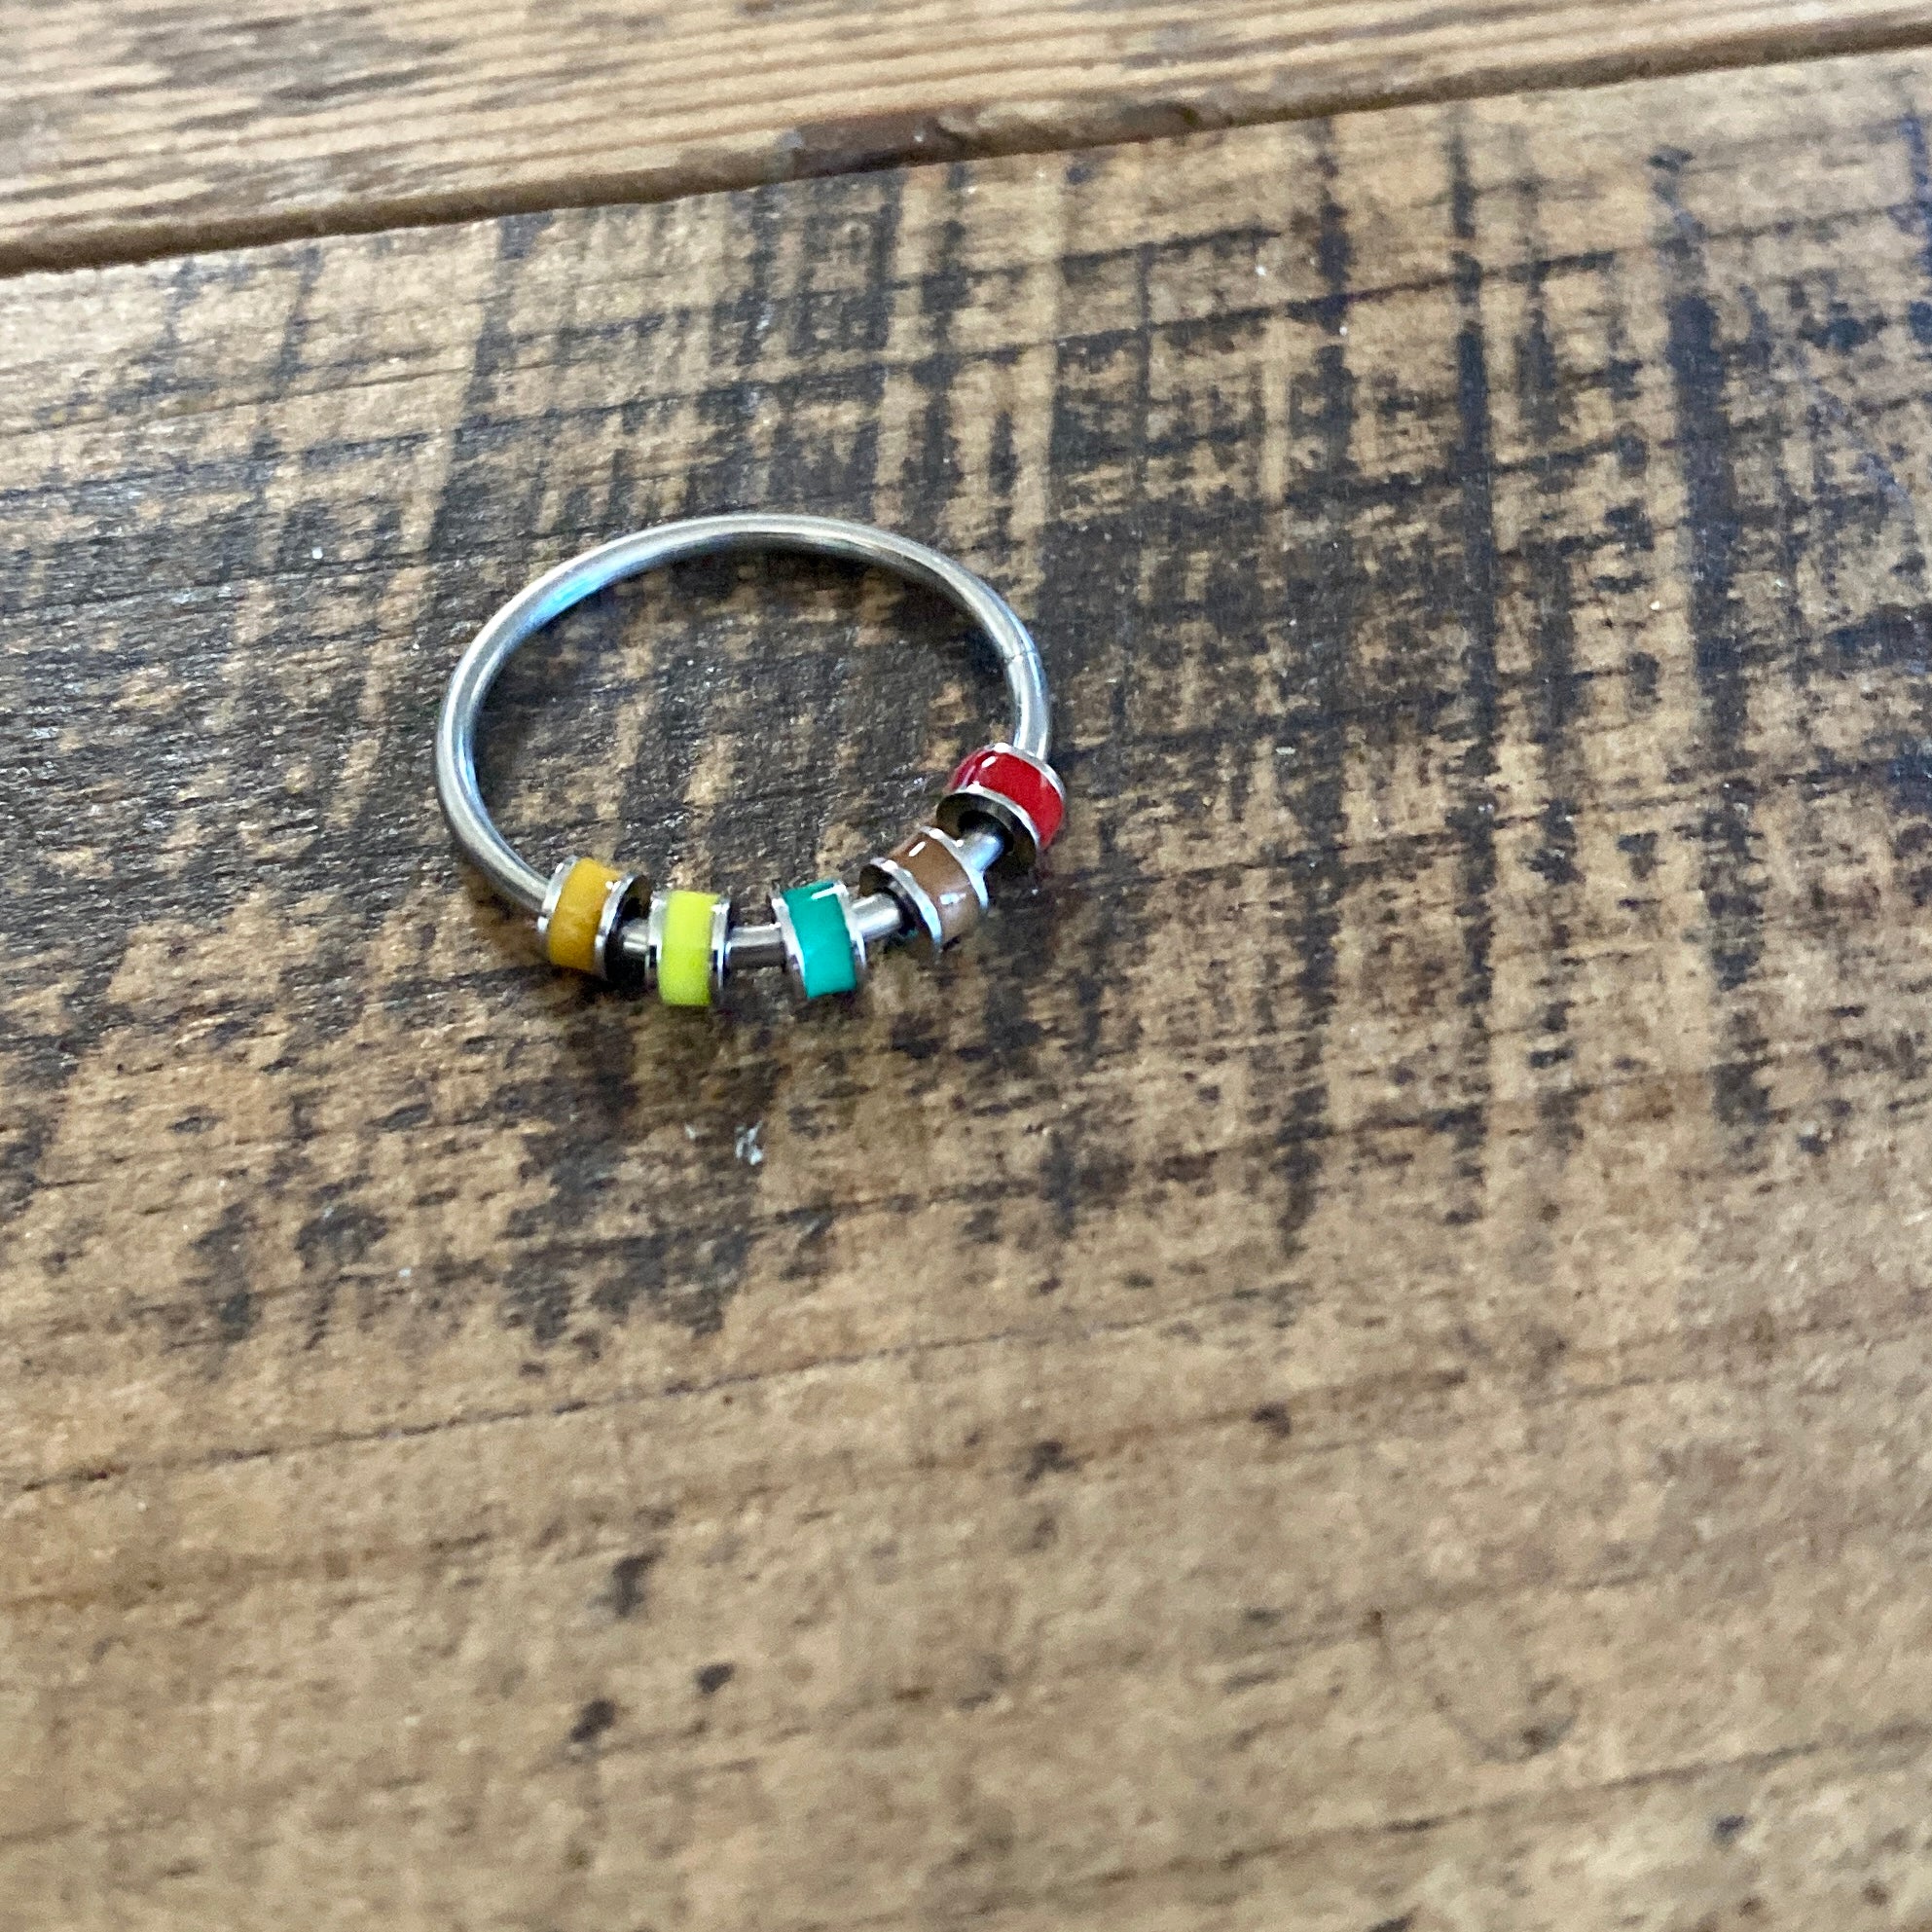 Rainbow Fidget Ring